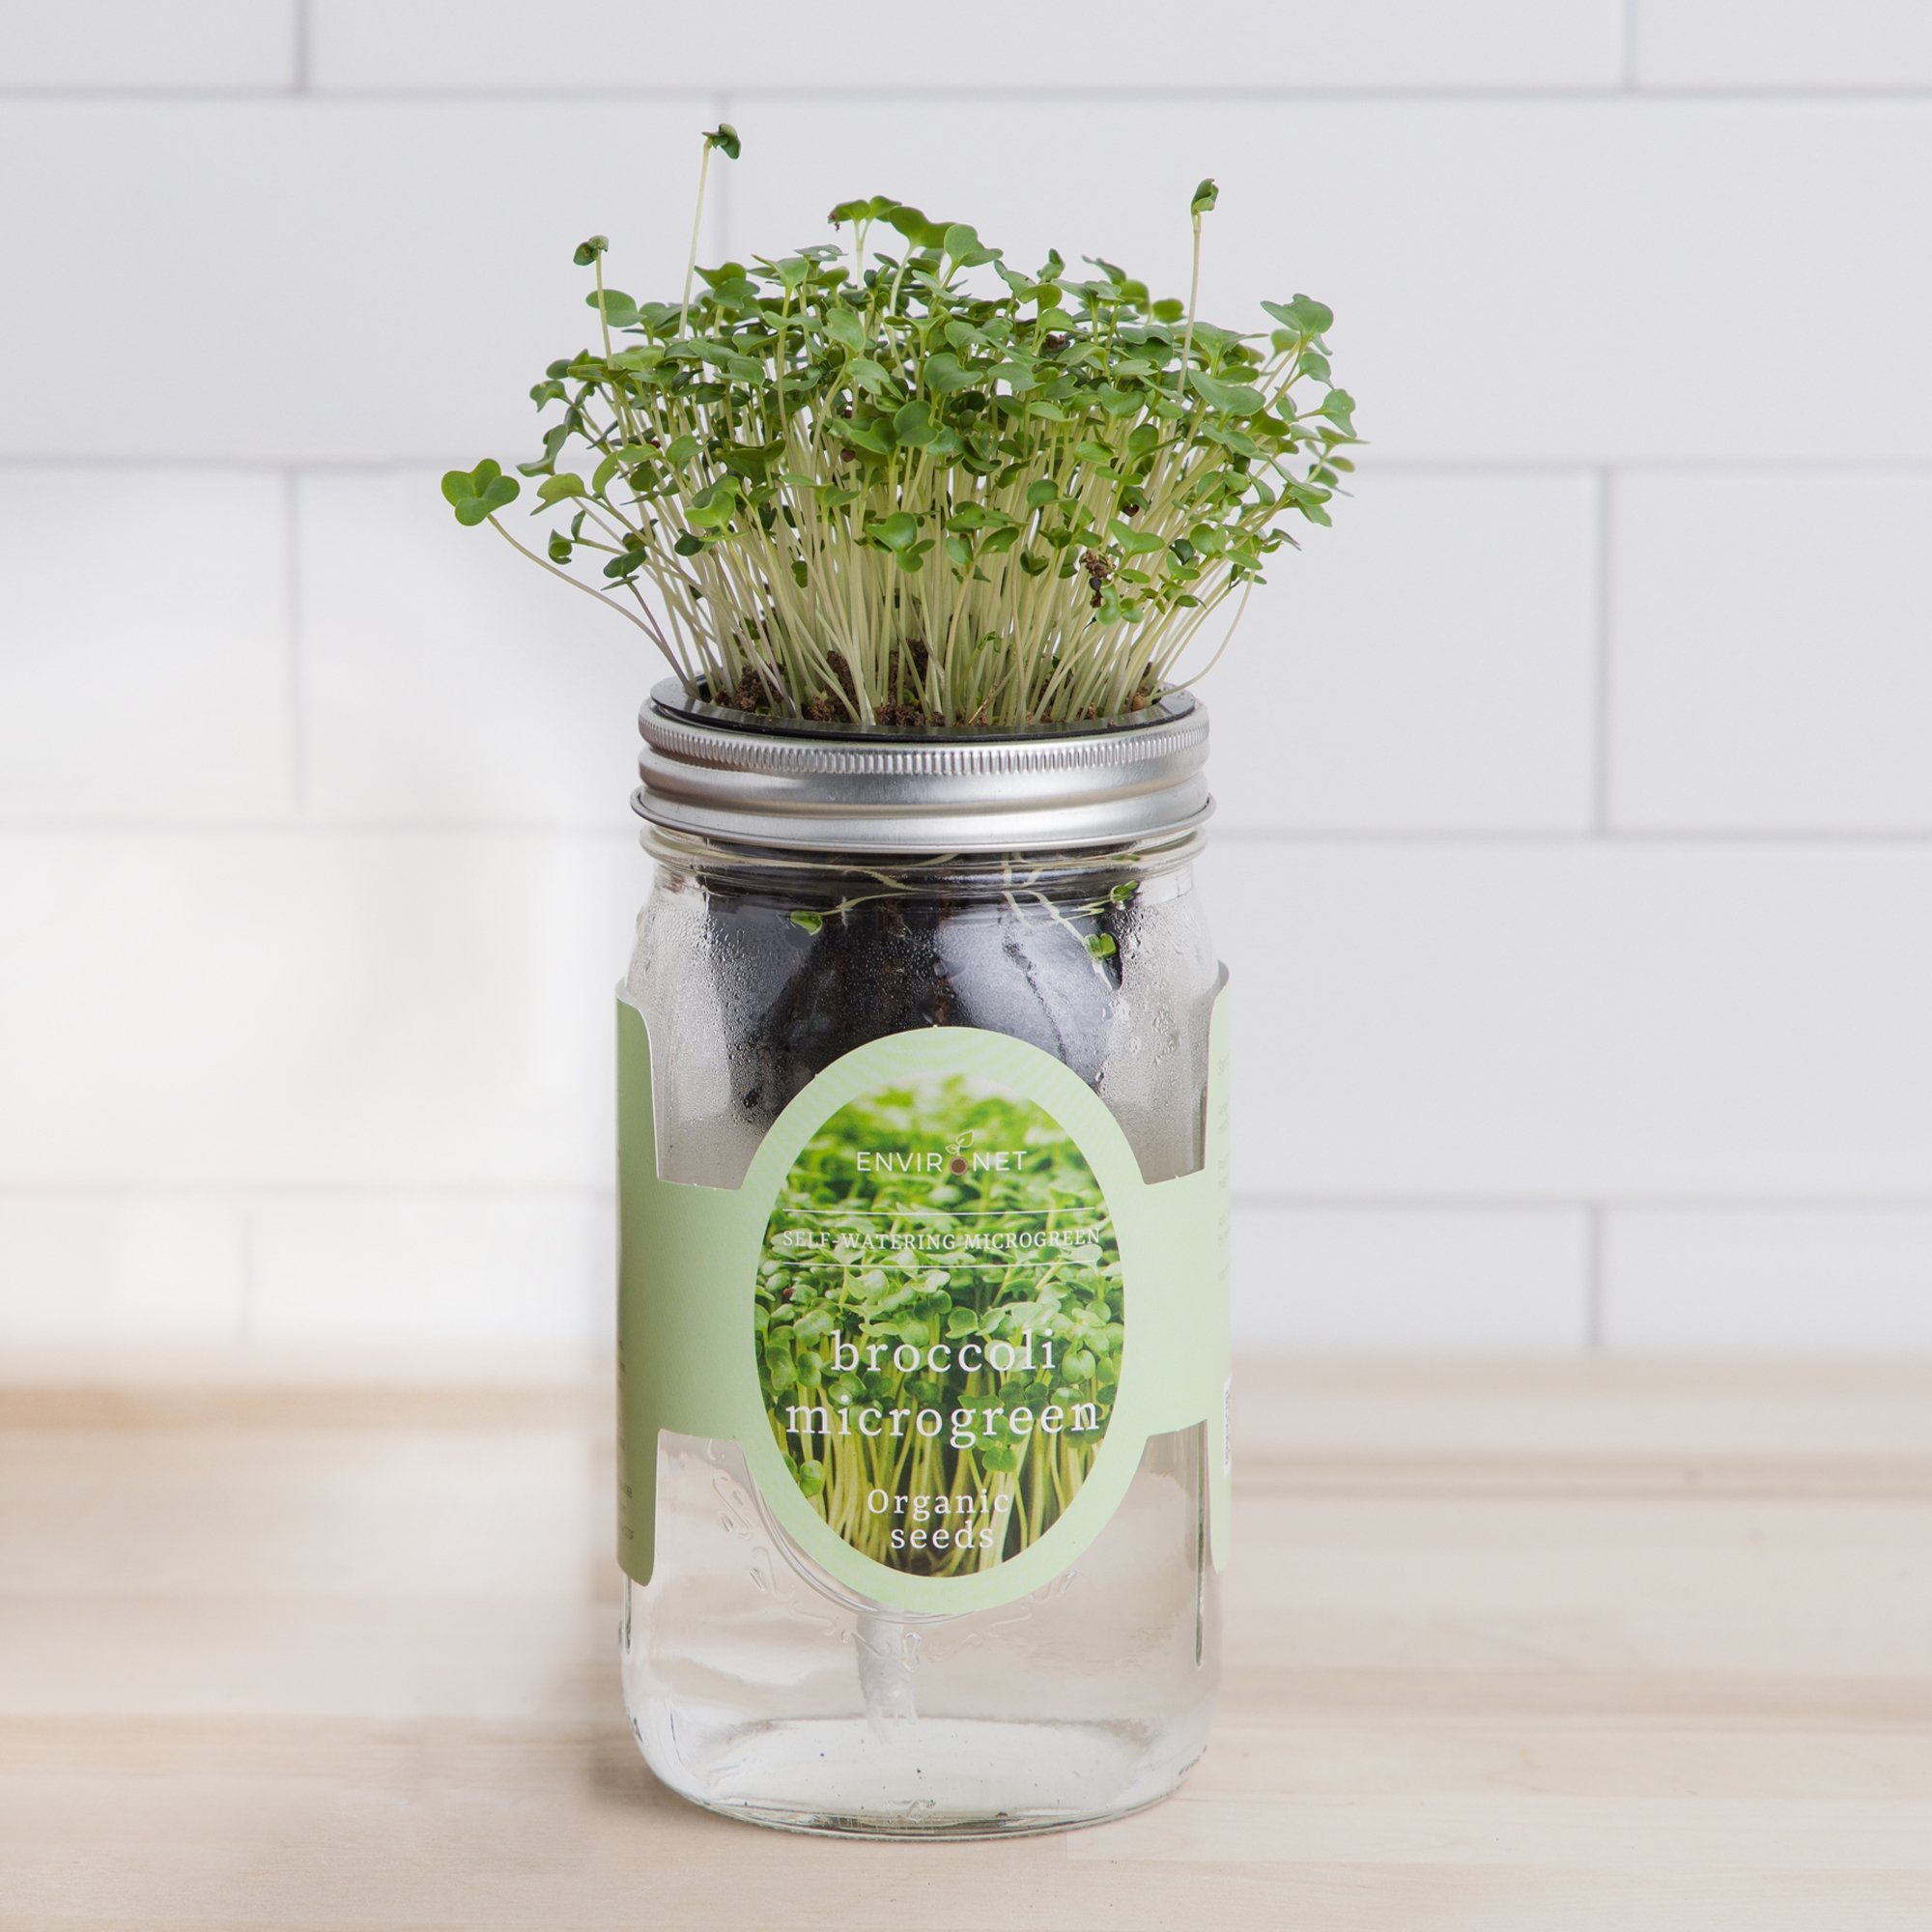 Hydroponic Microgreens Growing Kit - Self Watering Mason Jar Growing Kit with Organic Seeds (Broccoli)